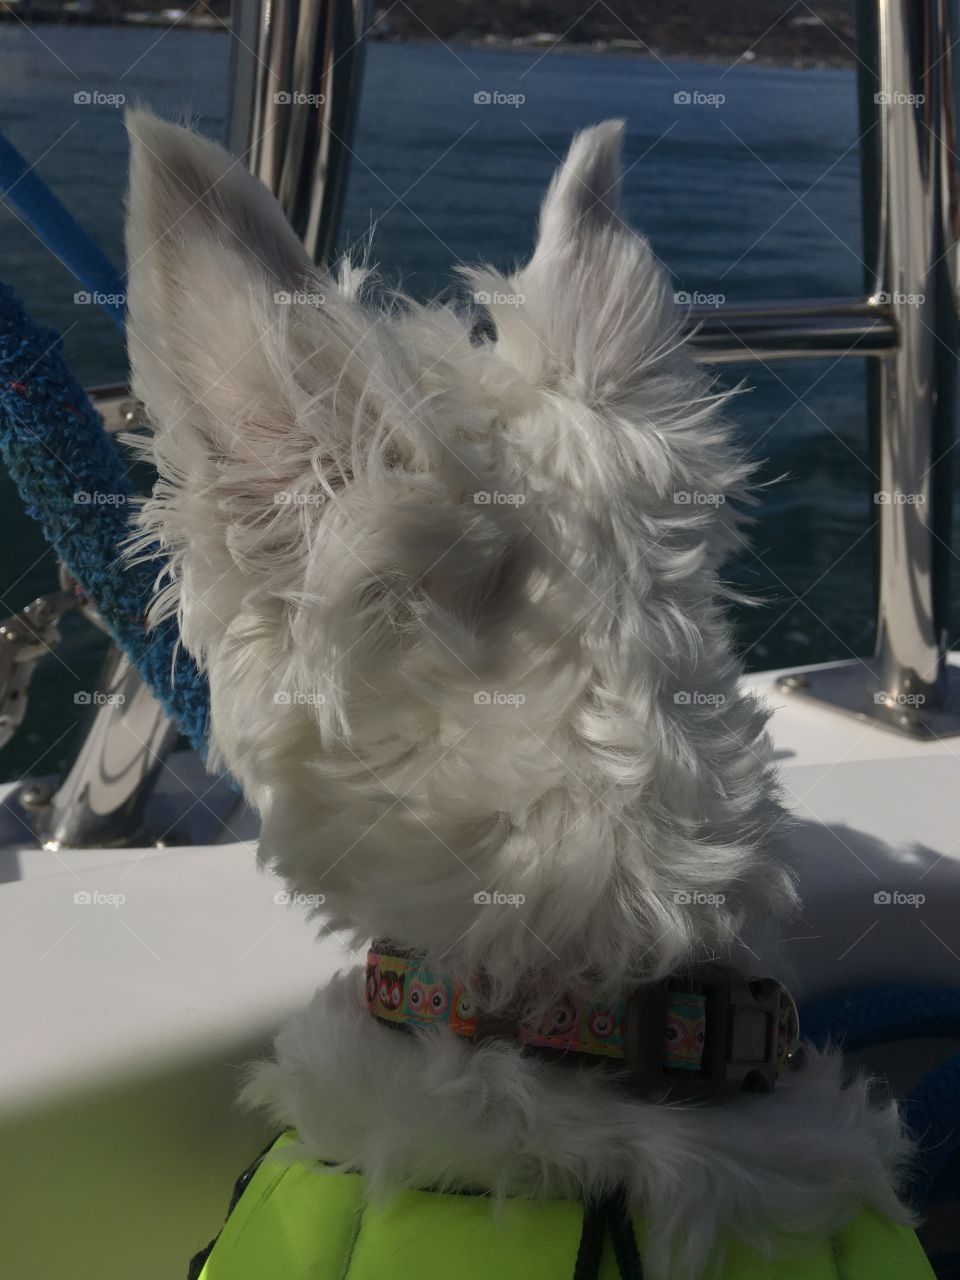 Boat dog 